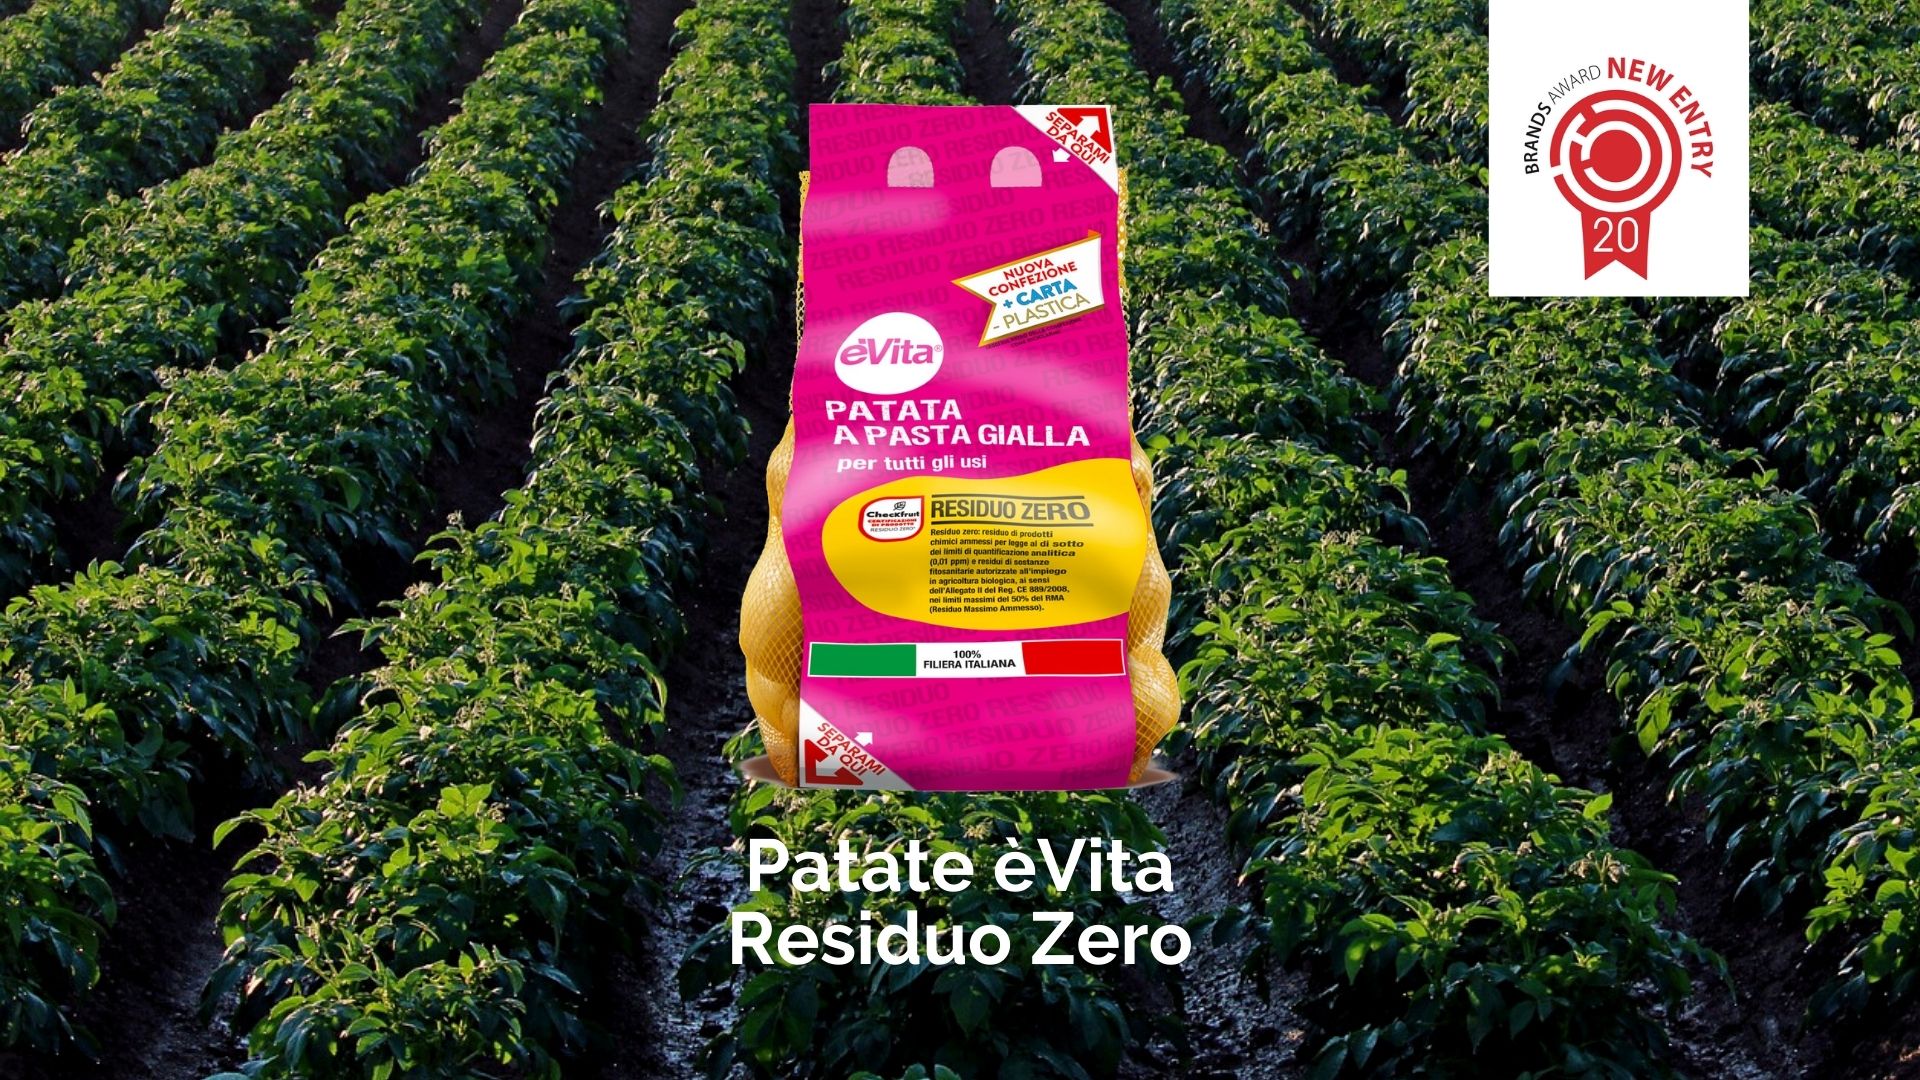 Romagnoli F.lli Spa: èVita Residue-Free potatoes win the “Brands Award 2020 New Entry” prize